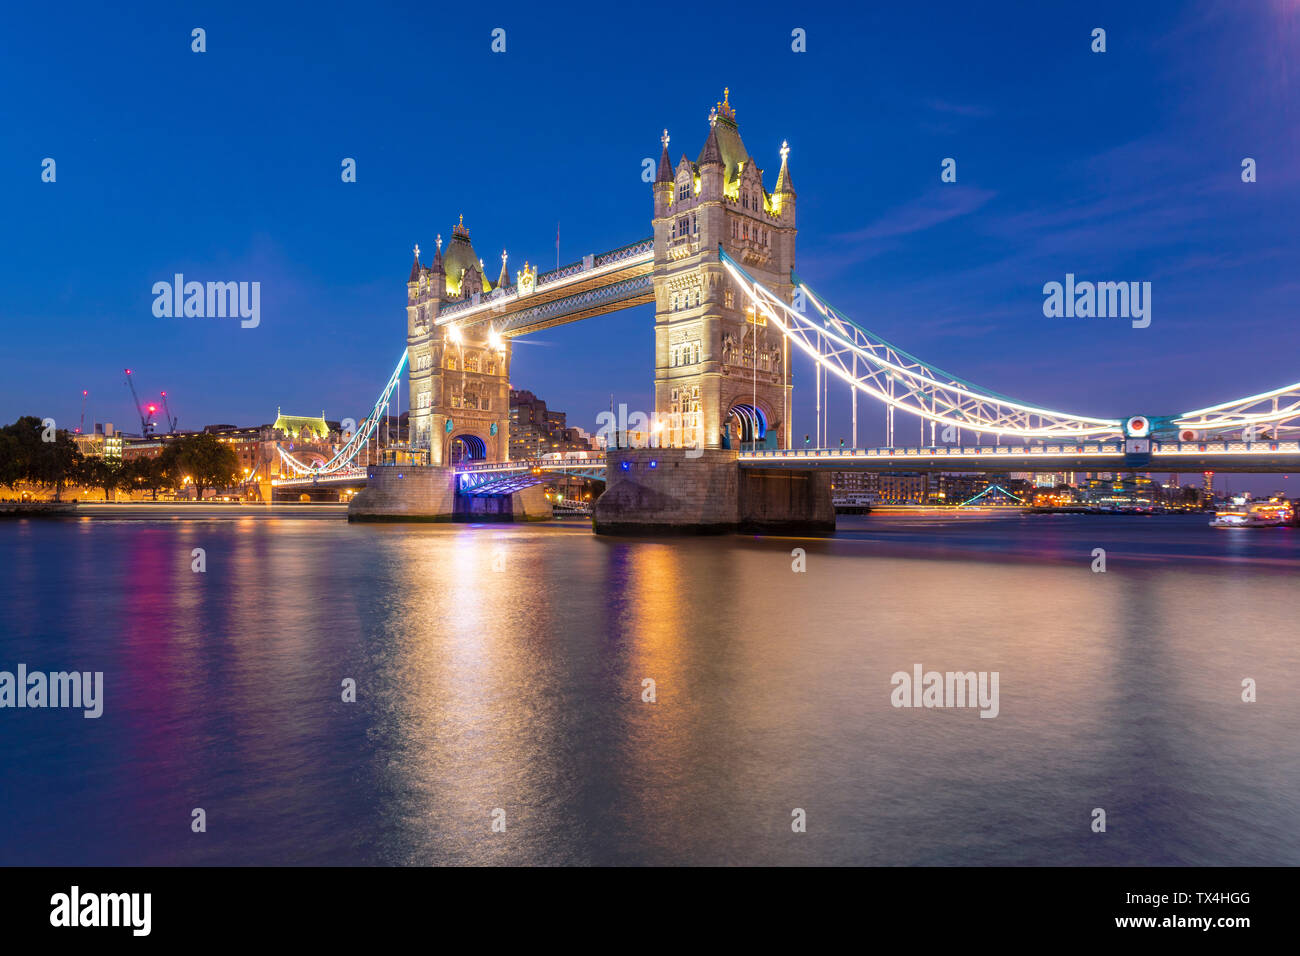 UK, London, illuminated Tower Bridge at night Stock Photo